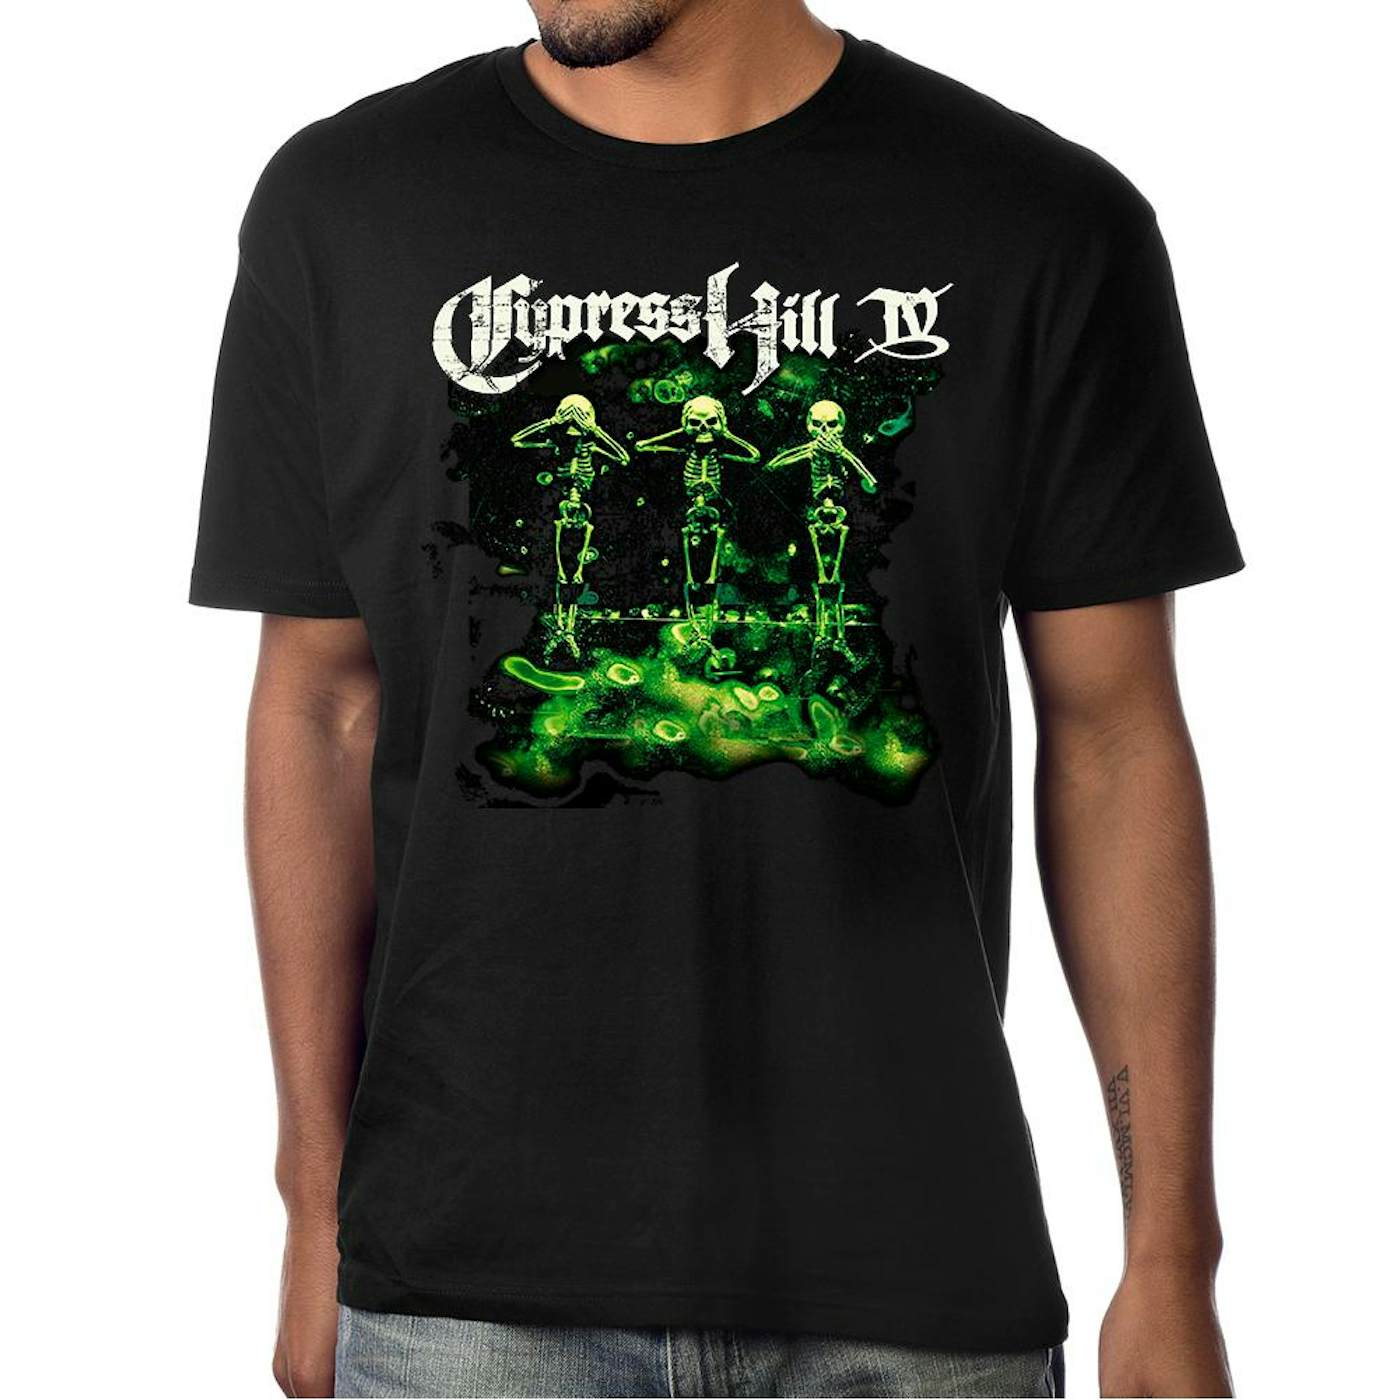 Cypress Hill "IV Album" T-Shirt